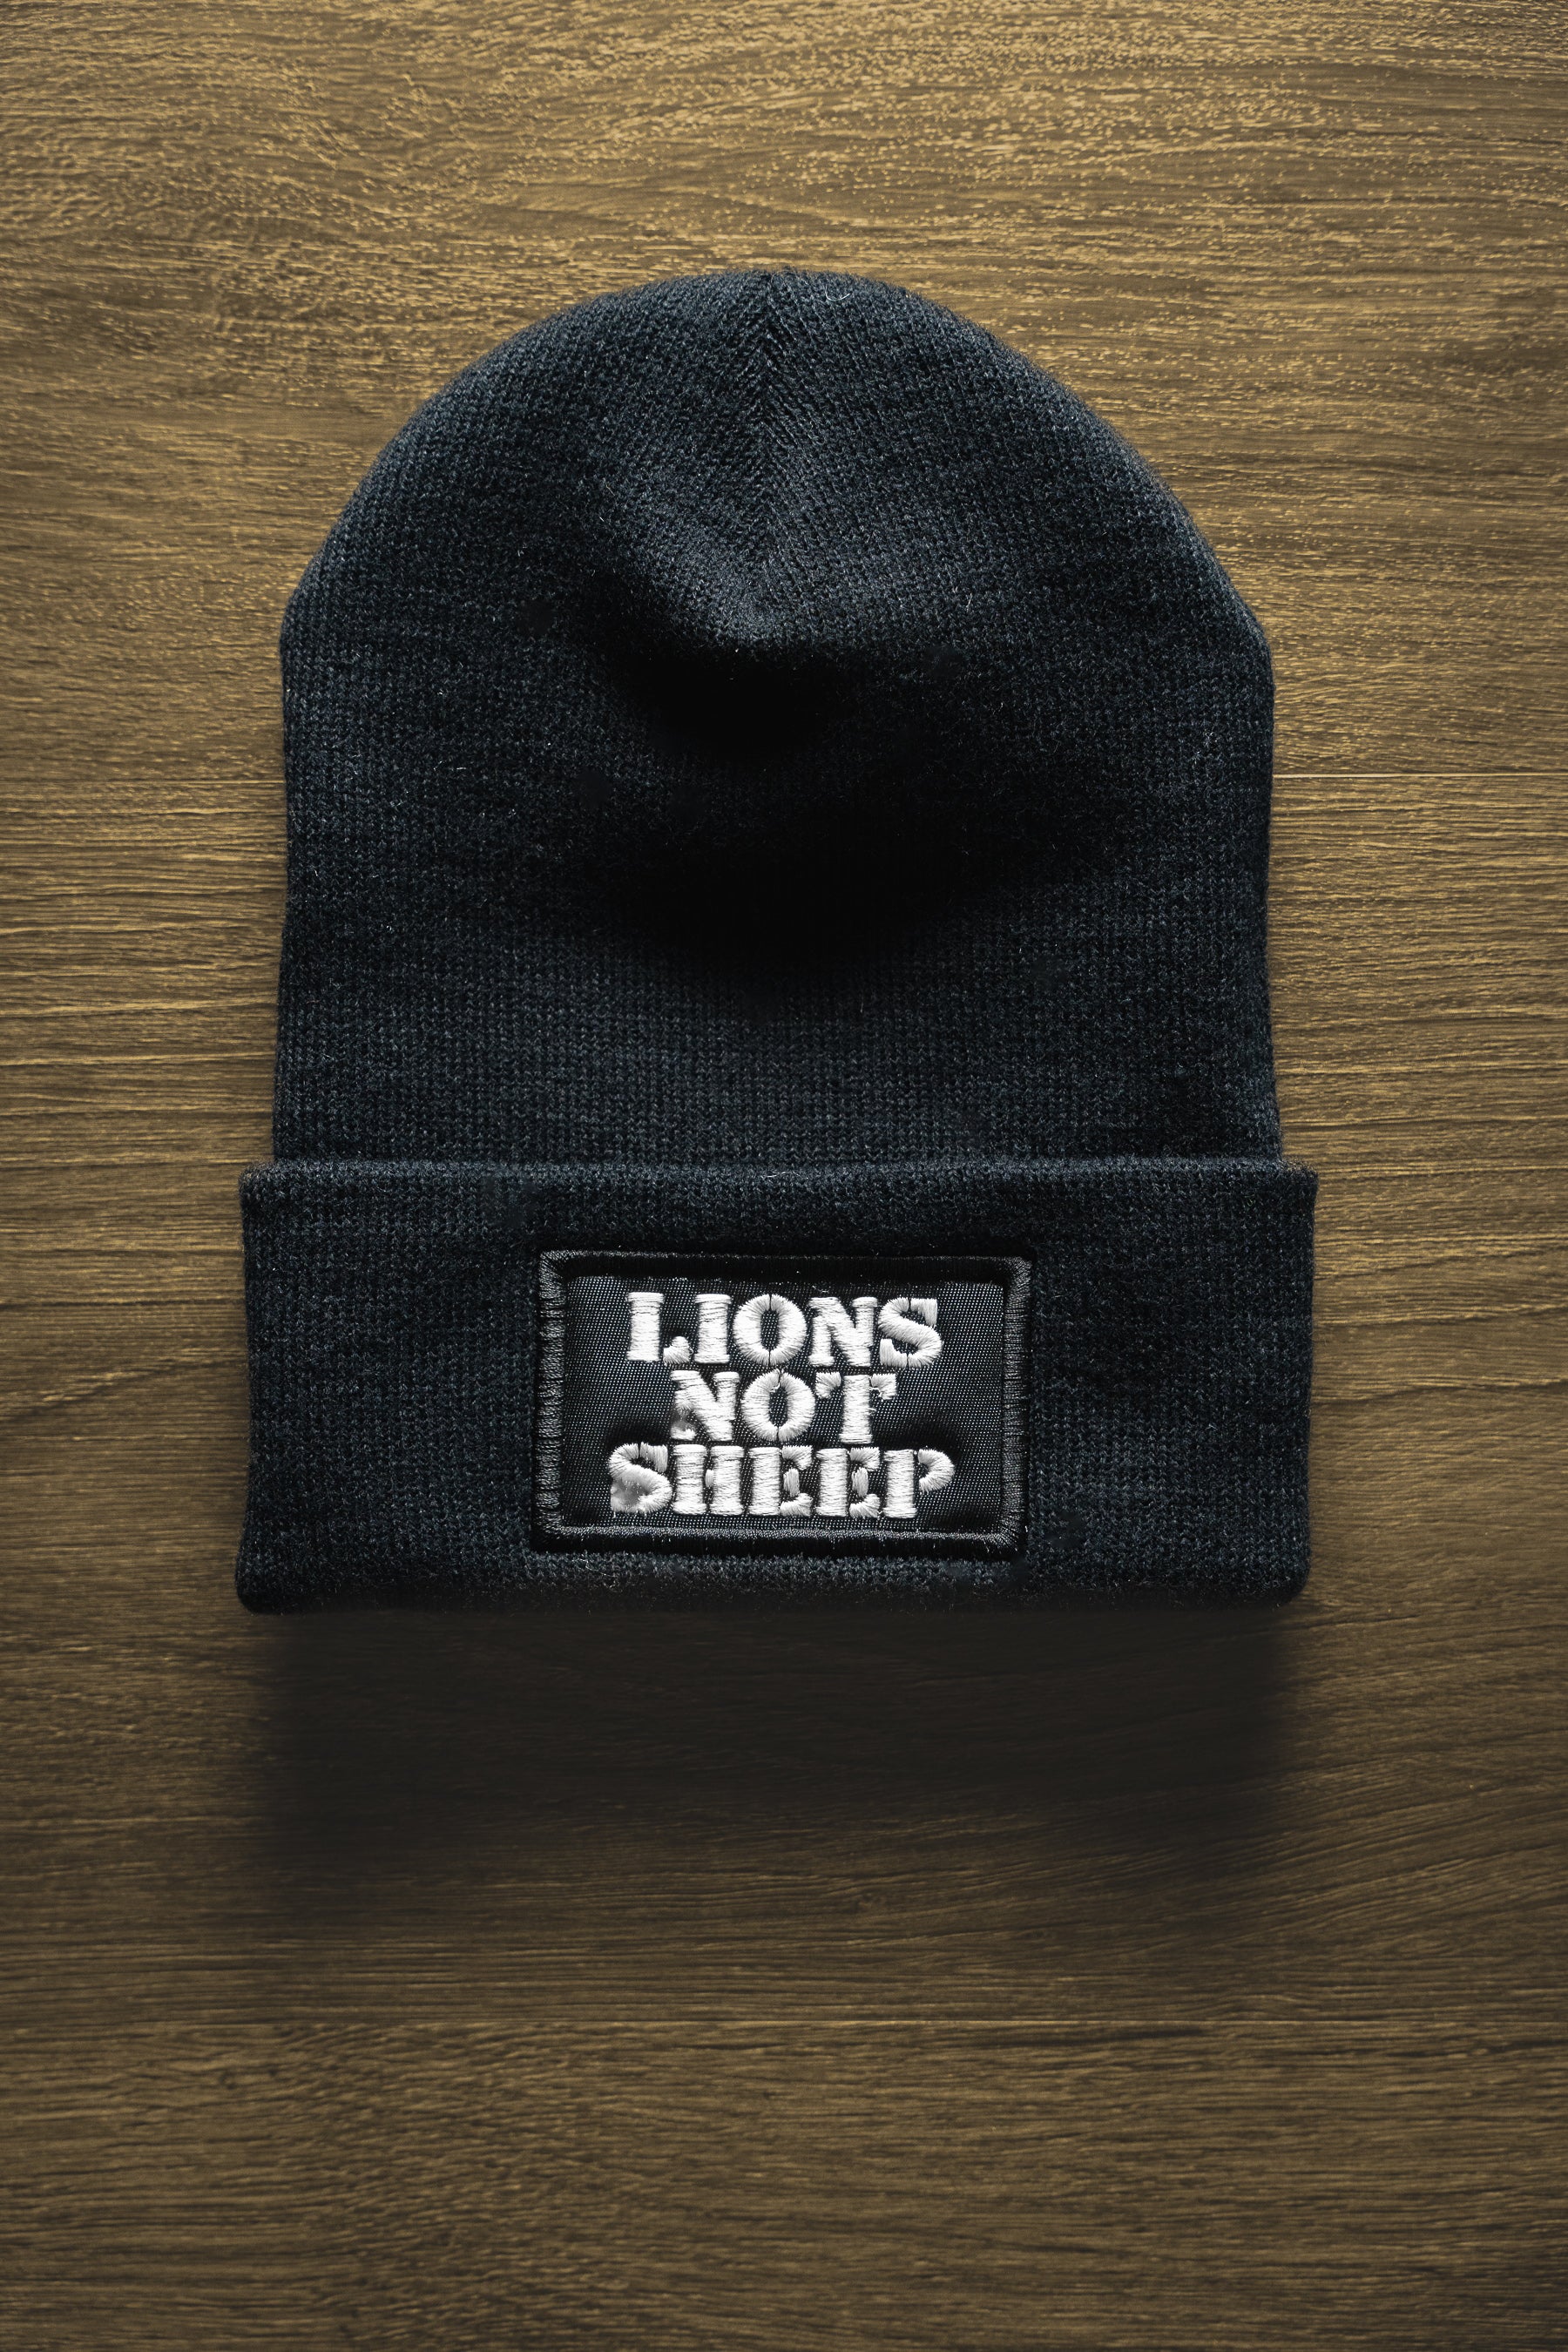 Lions Not Sheep "OG" Cuffed Beanie (Black) - Lions Not Sheep ®